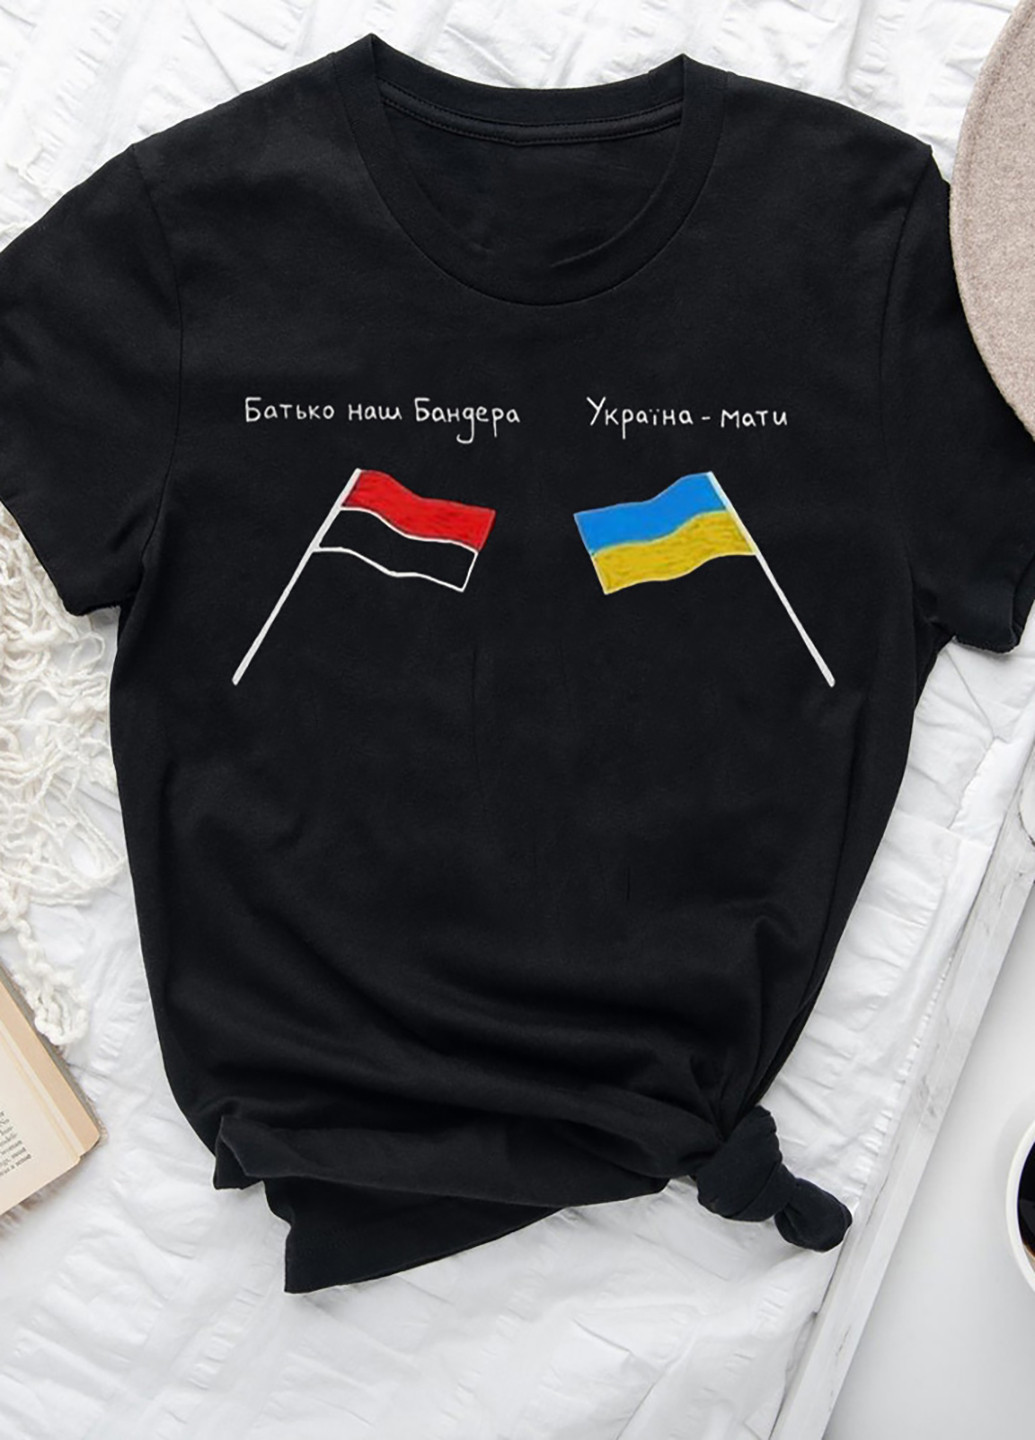 Чорна демісезон футболка жіноча чорна батько наш бандера, україна - мати! Love&Live